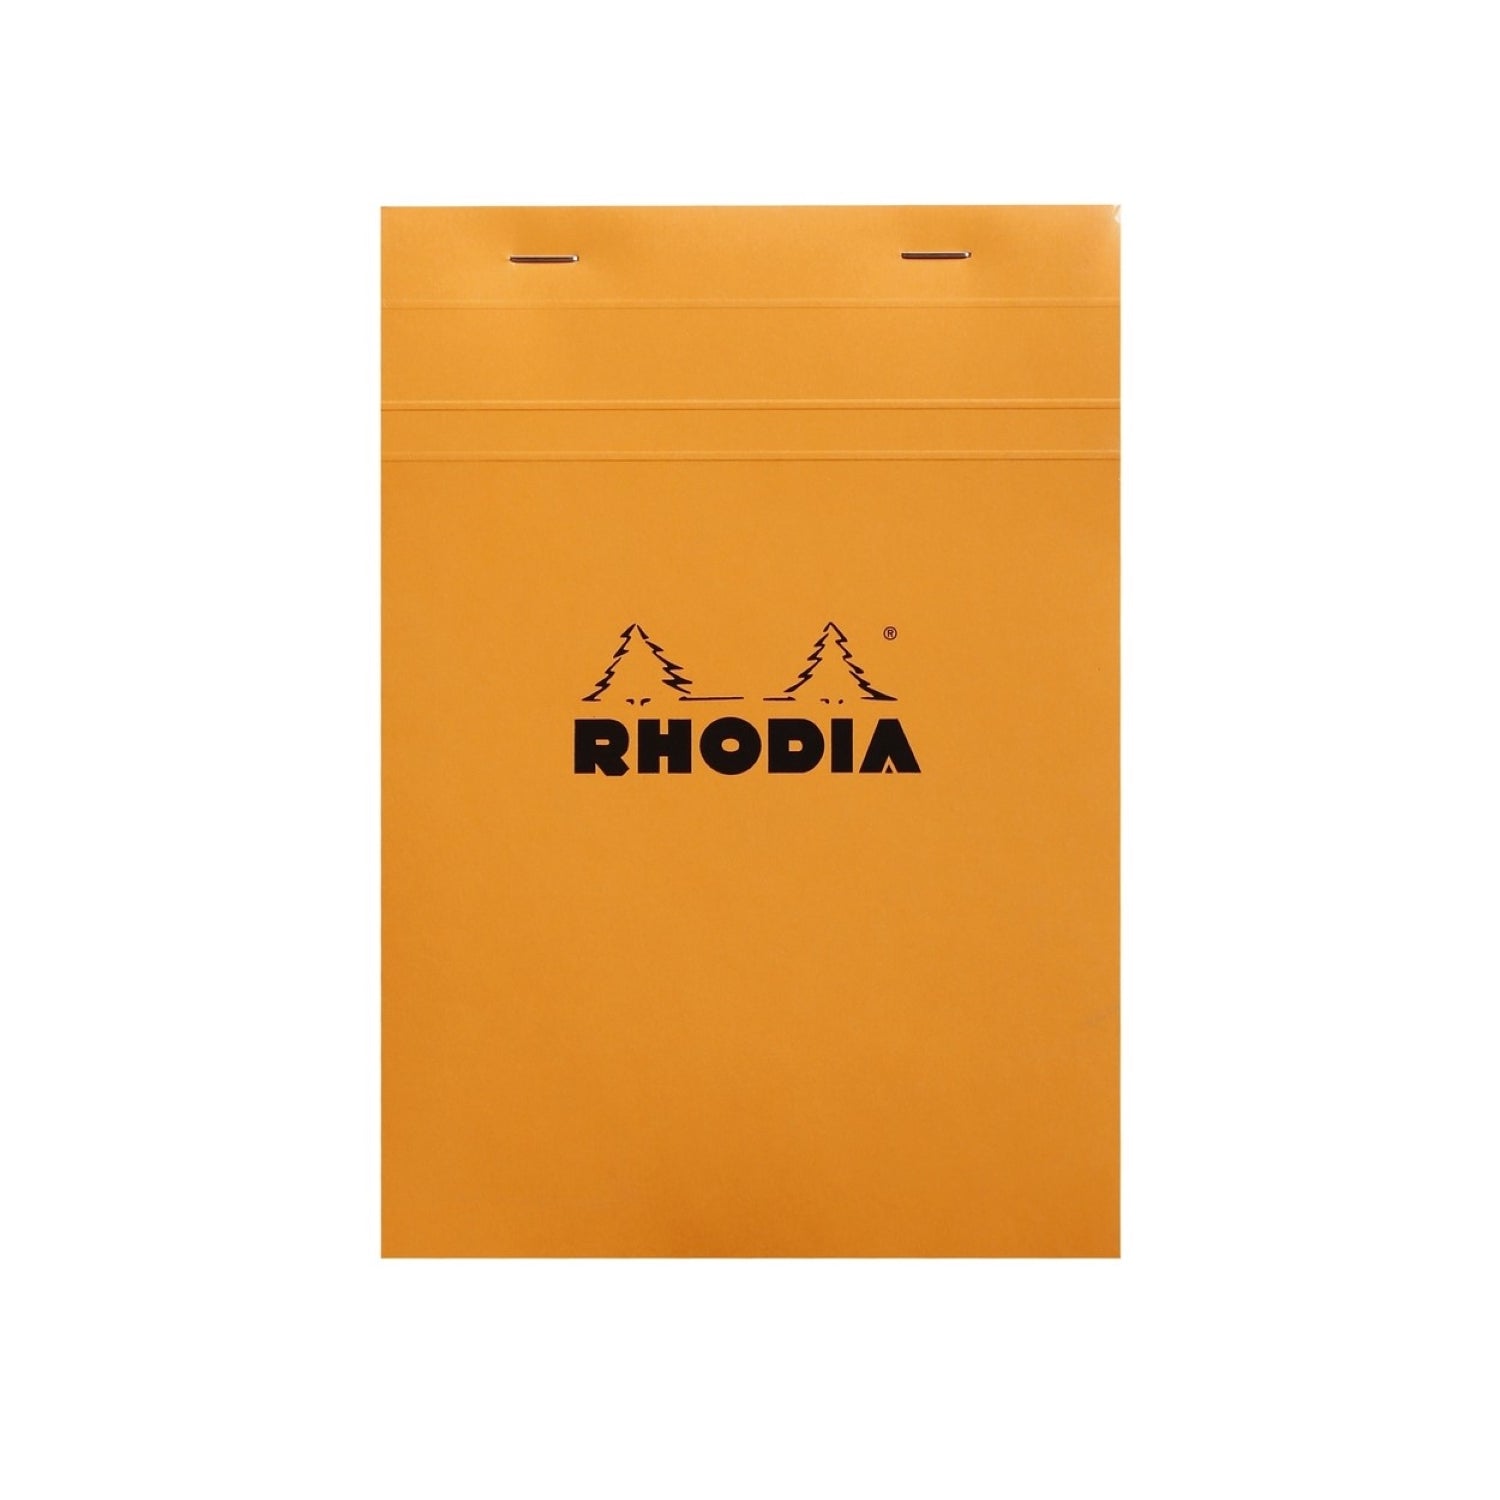 Rhodia Pad #16 A5 Grid